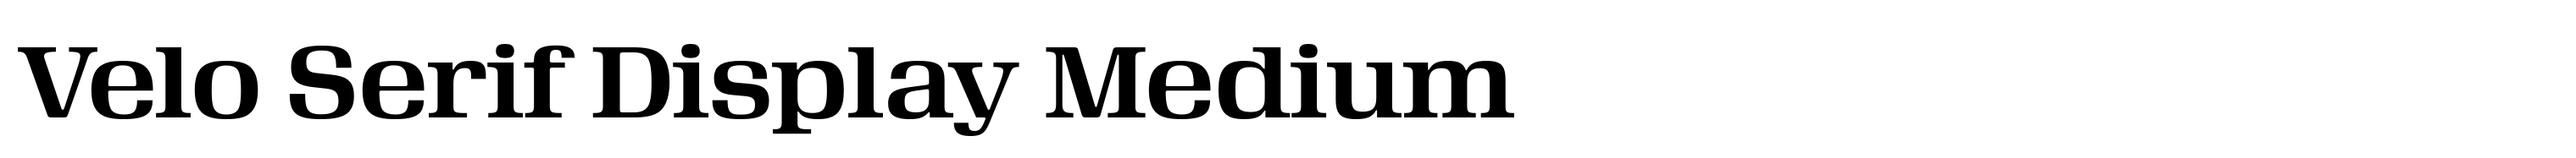 Velo Serif Display Medium